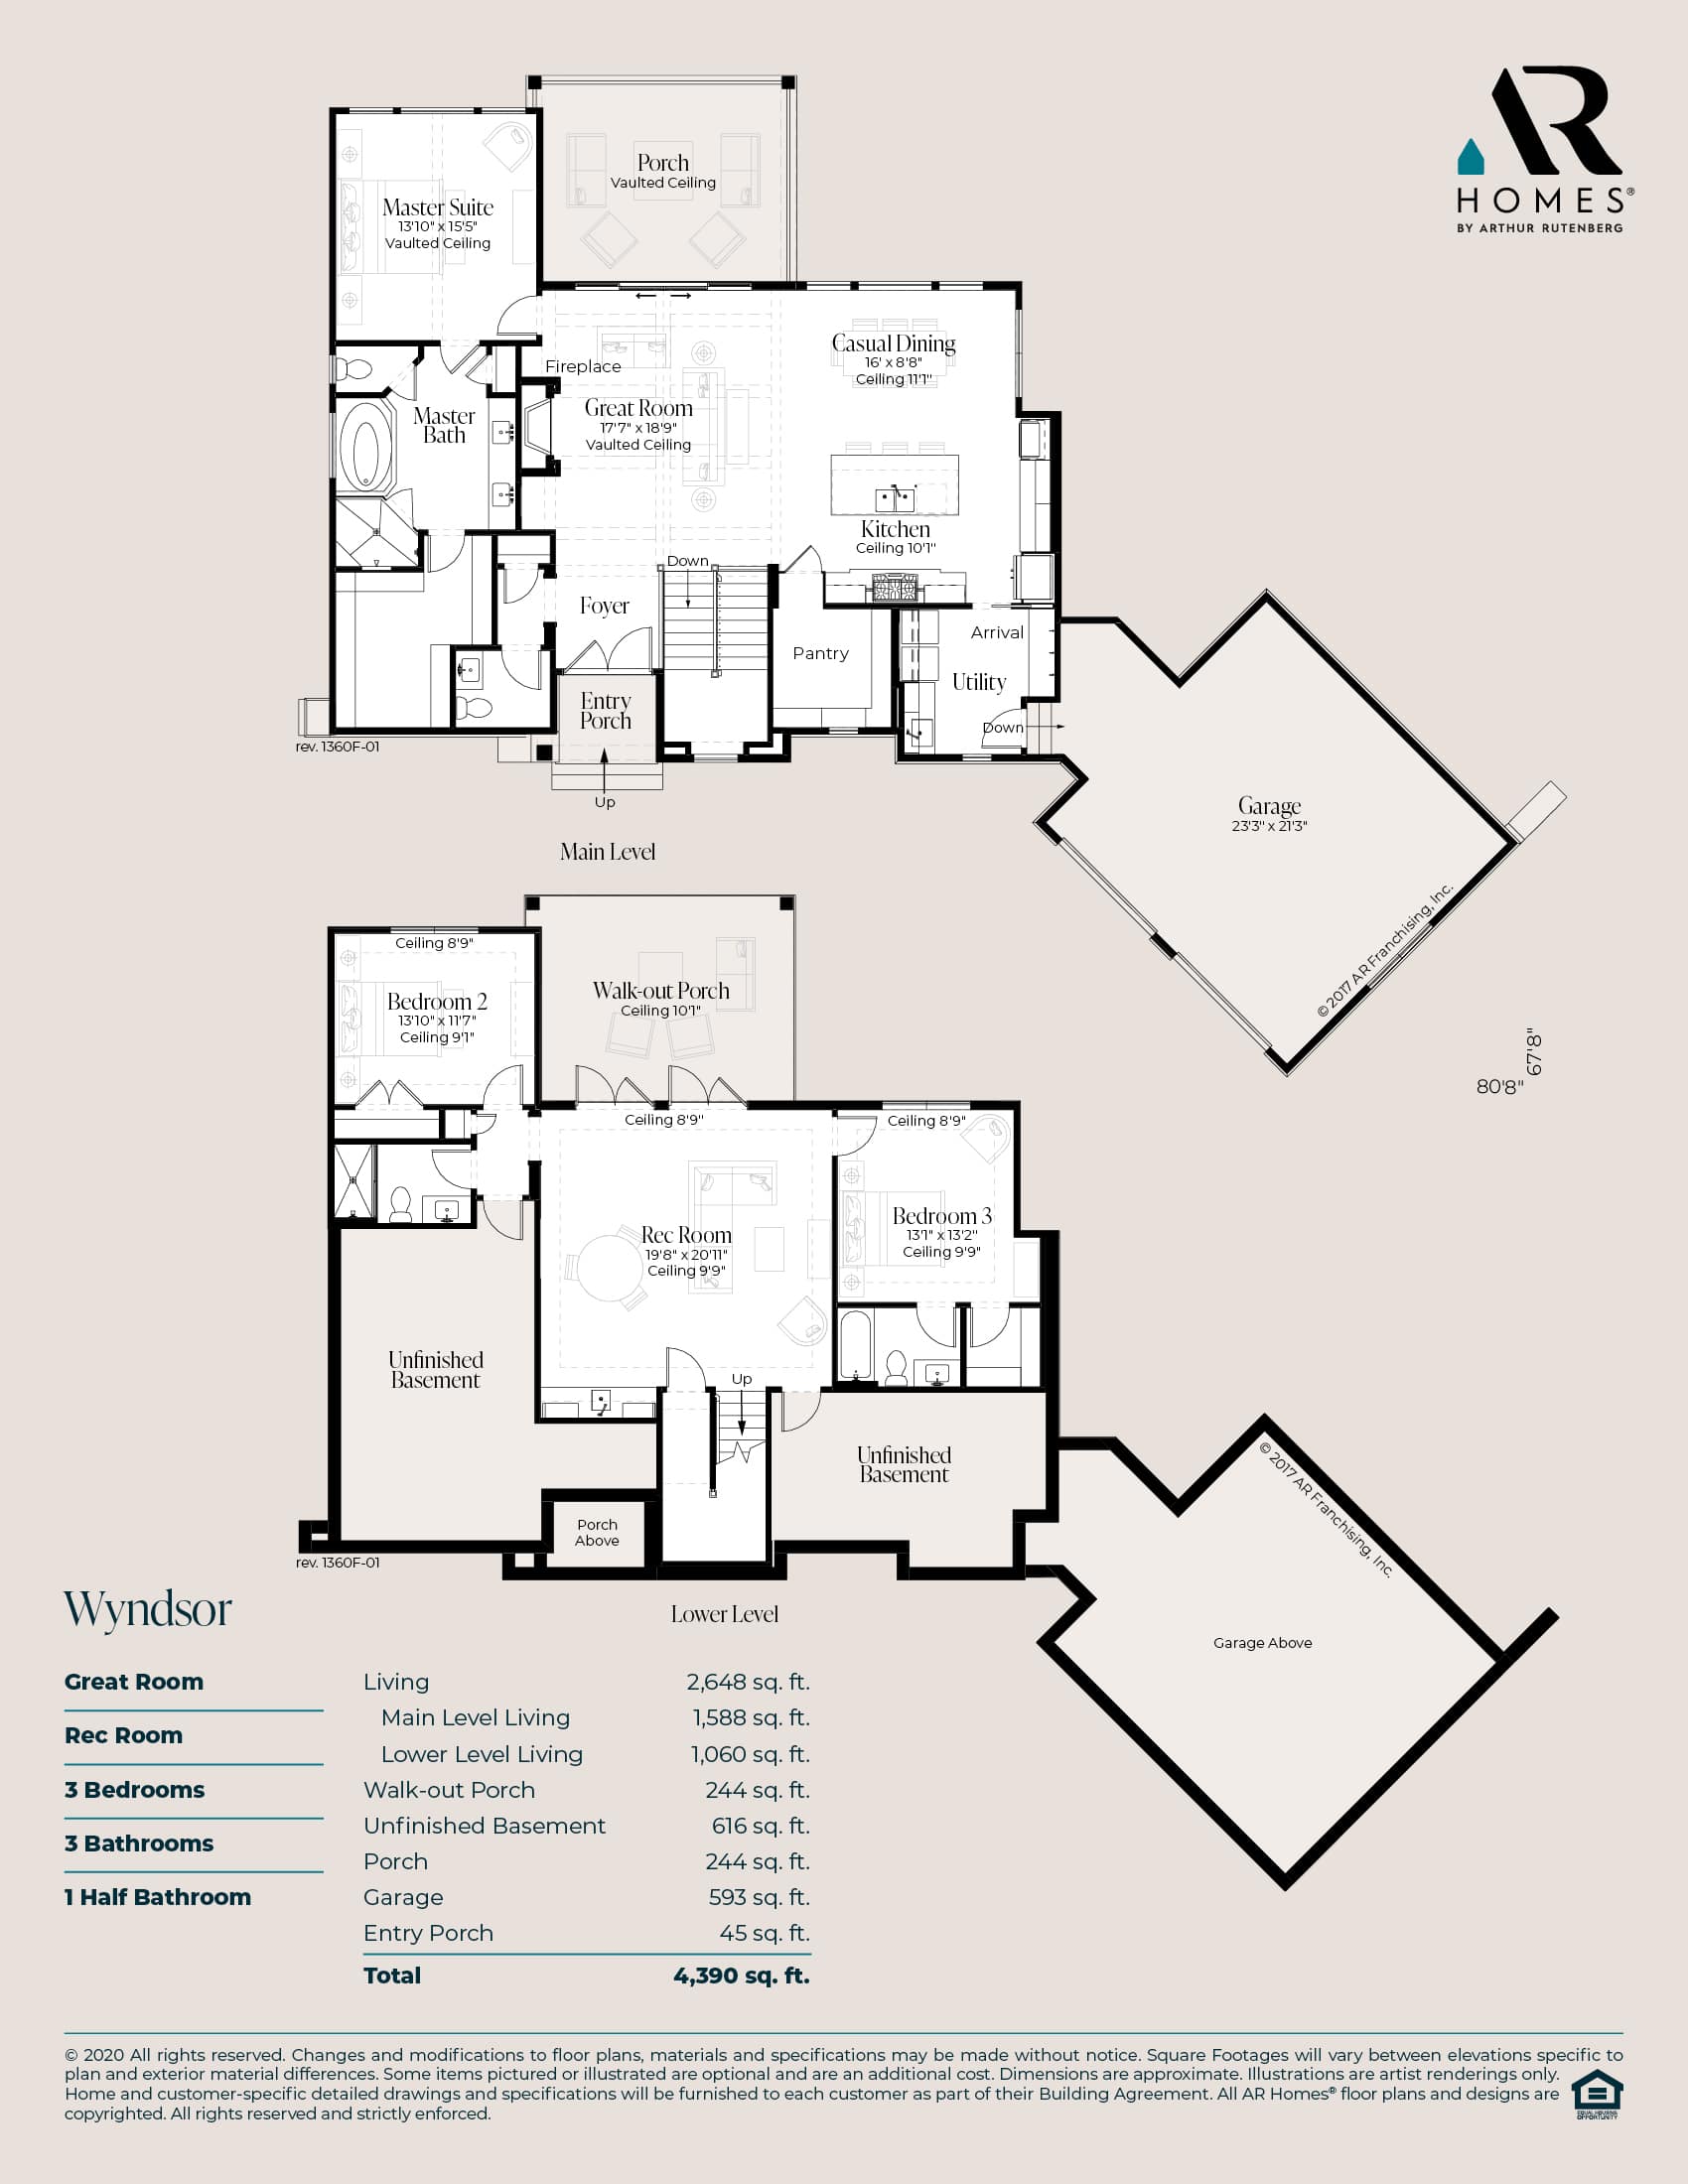 The Wyndsor Plan Ar Homes By Arthur Rutenberg